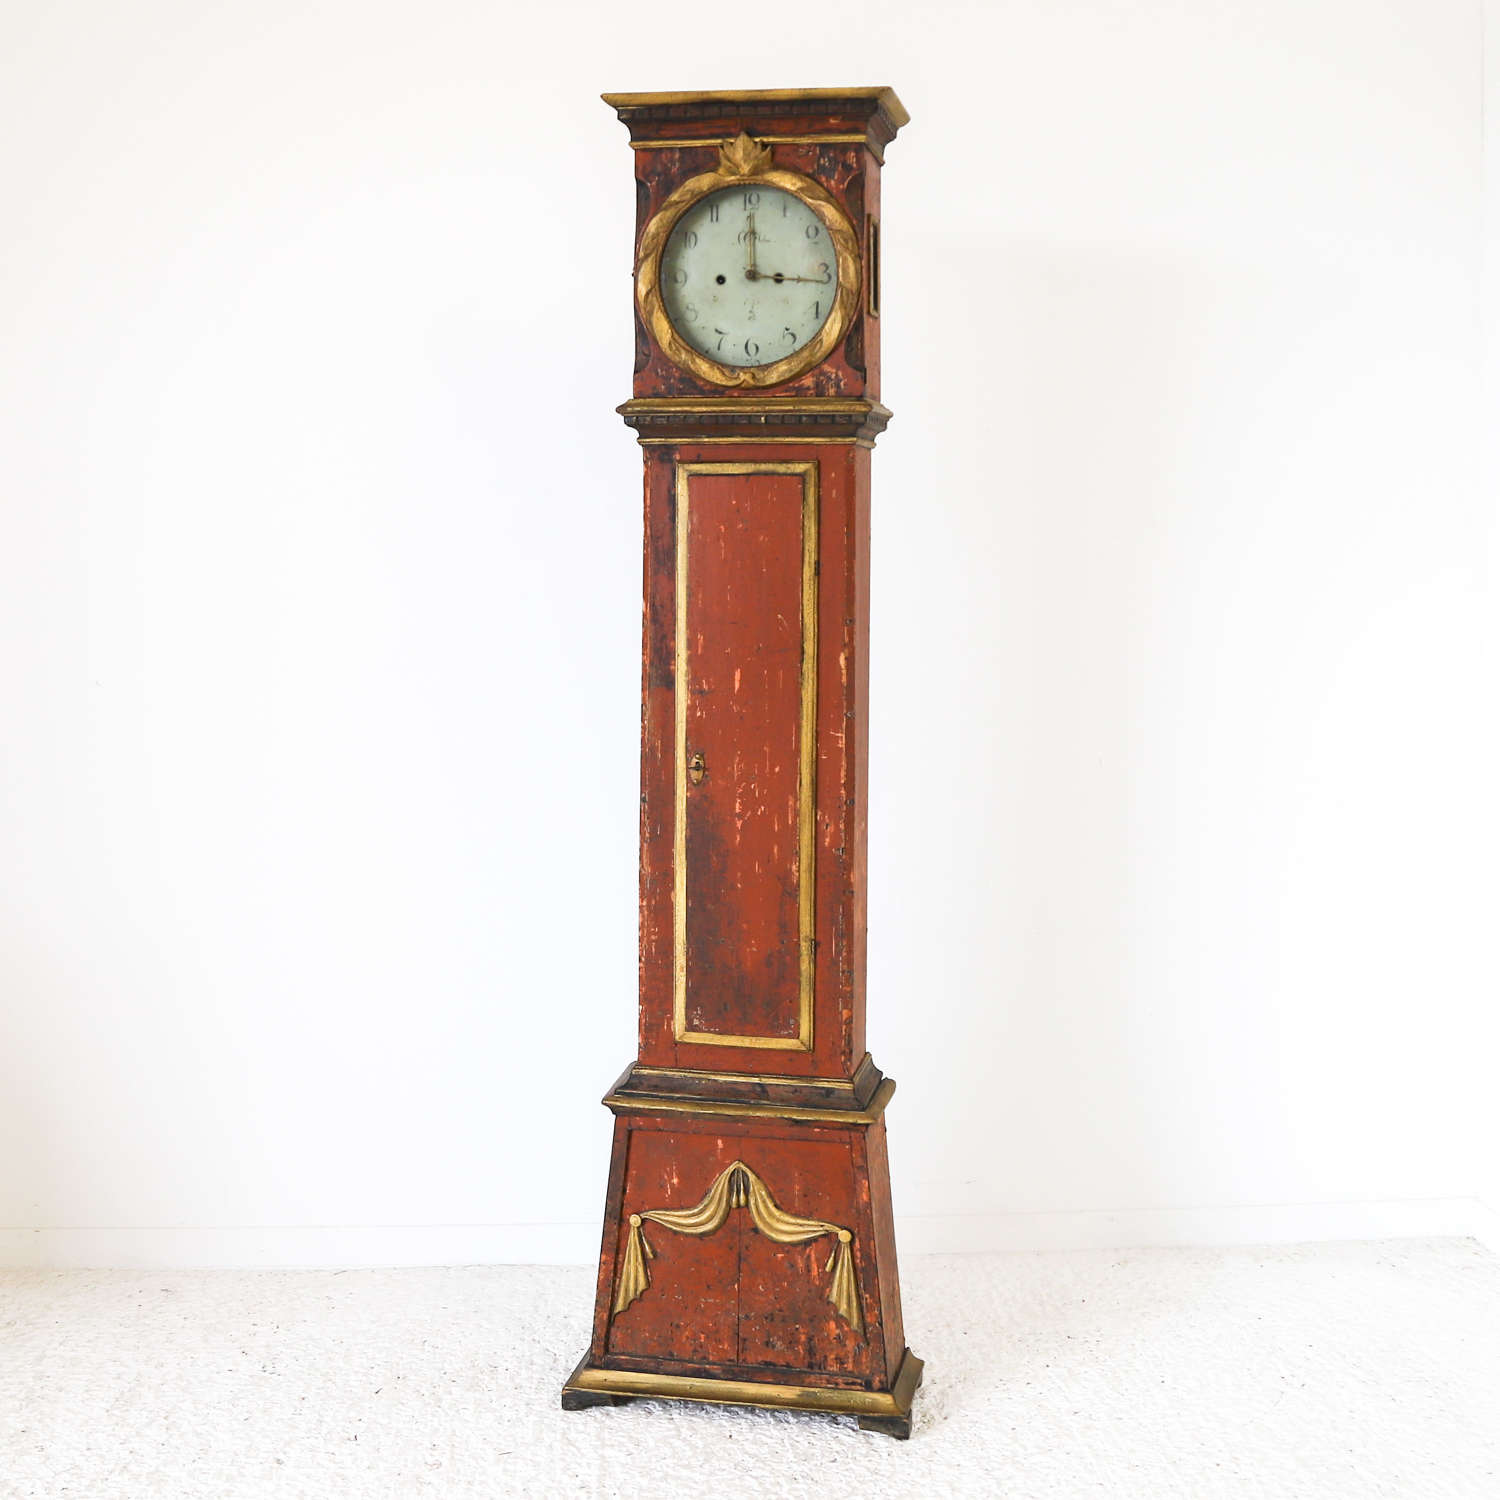 Danish Bornholm Pine Long-Case Clock - 18th Century Made in 1785